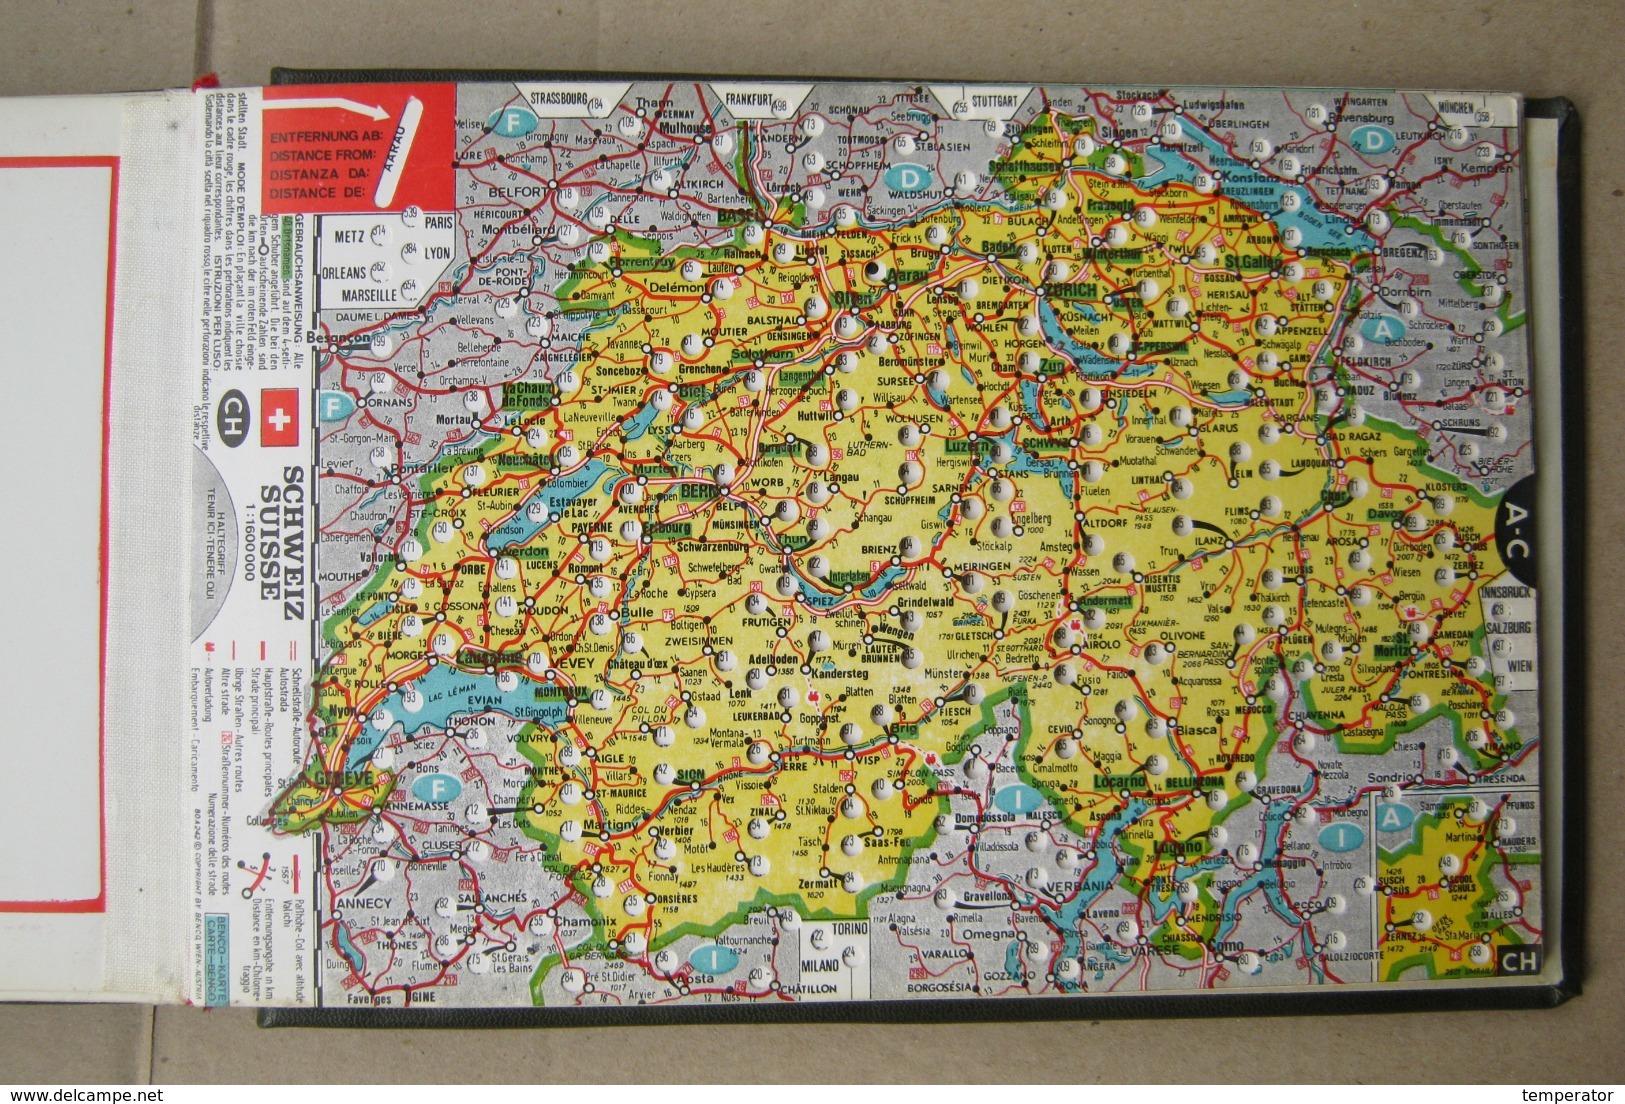 Carte des distances: JUGOSLAVIJA, AUSTRIA, BENELUX, DEUTSCHLAND, FRANCE, GREAT BRITAIN, ITALIA, SUISSE, SKANDINAVIA